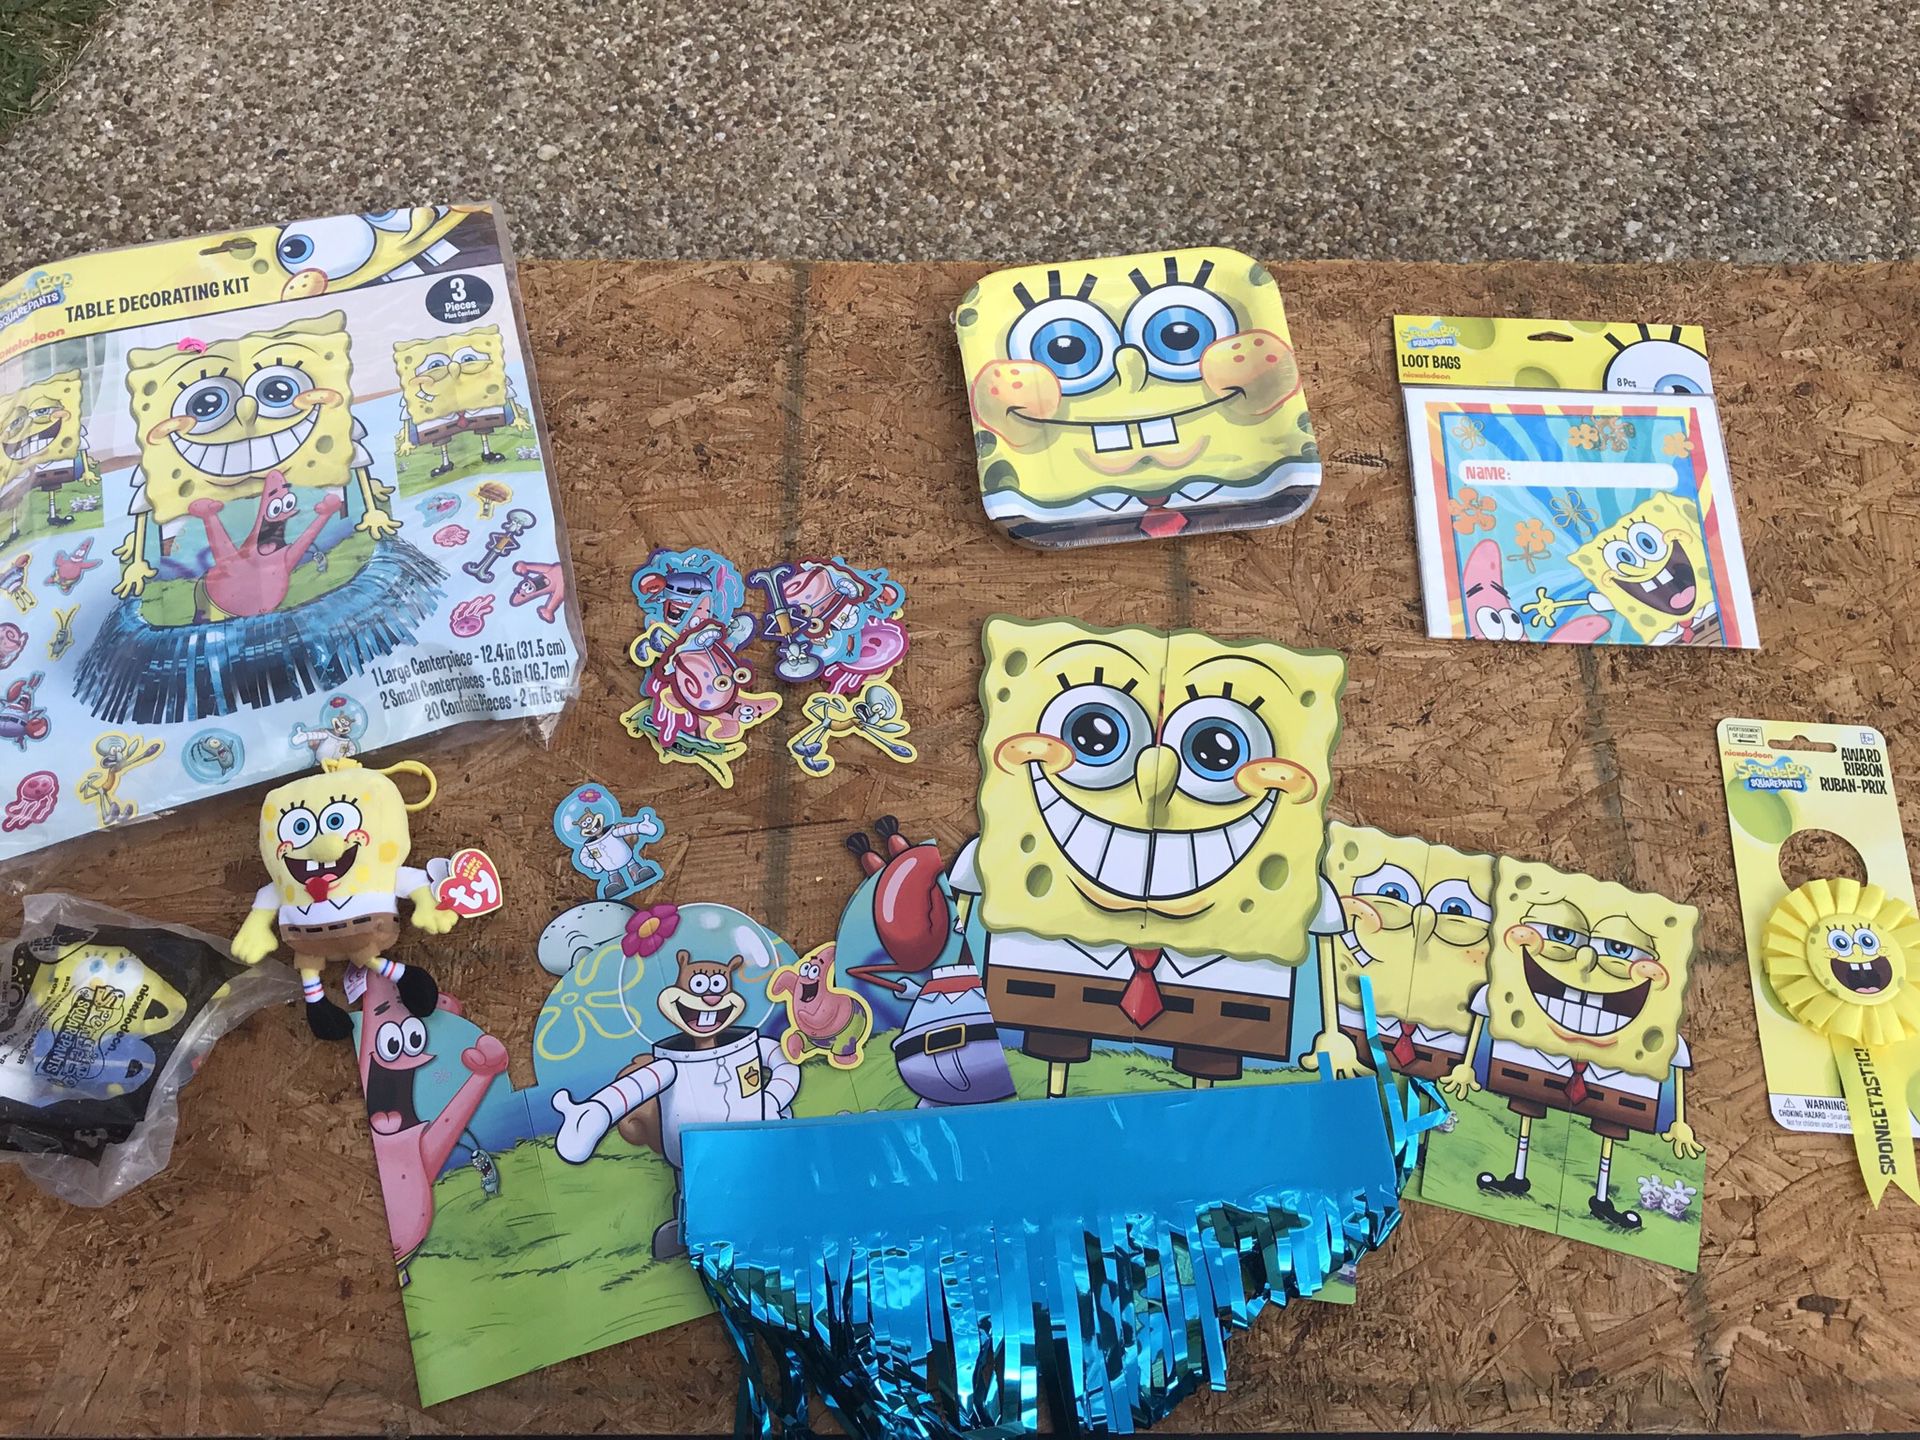 SpongeBob SquarePants party decorations